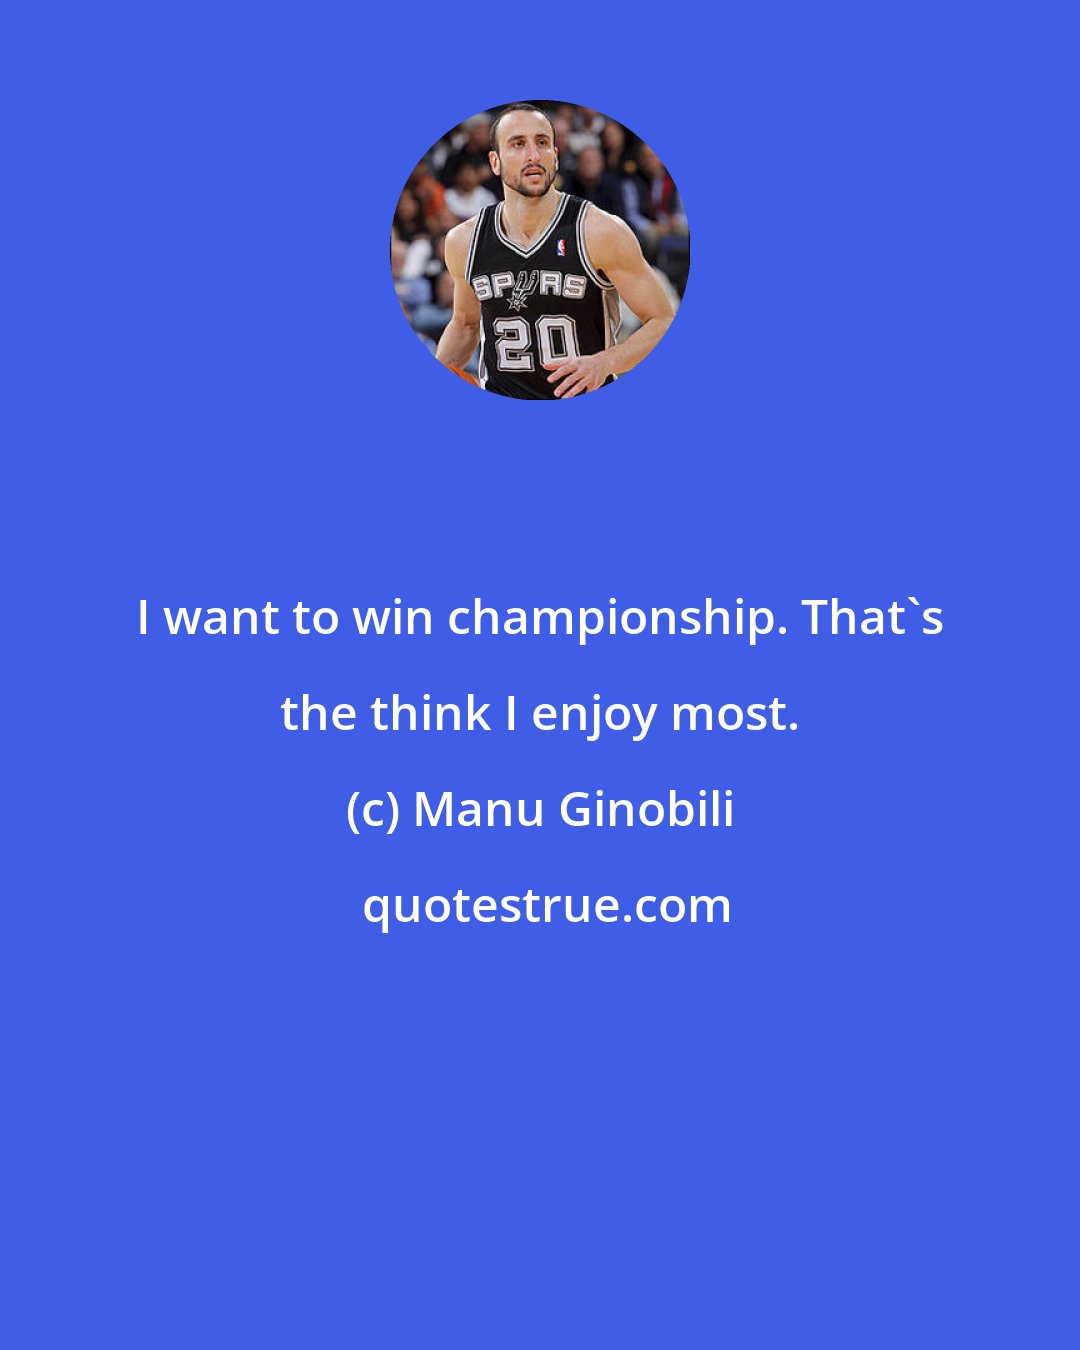 Manu Ginobili: I want to win championship. That's the think I enjoy most.